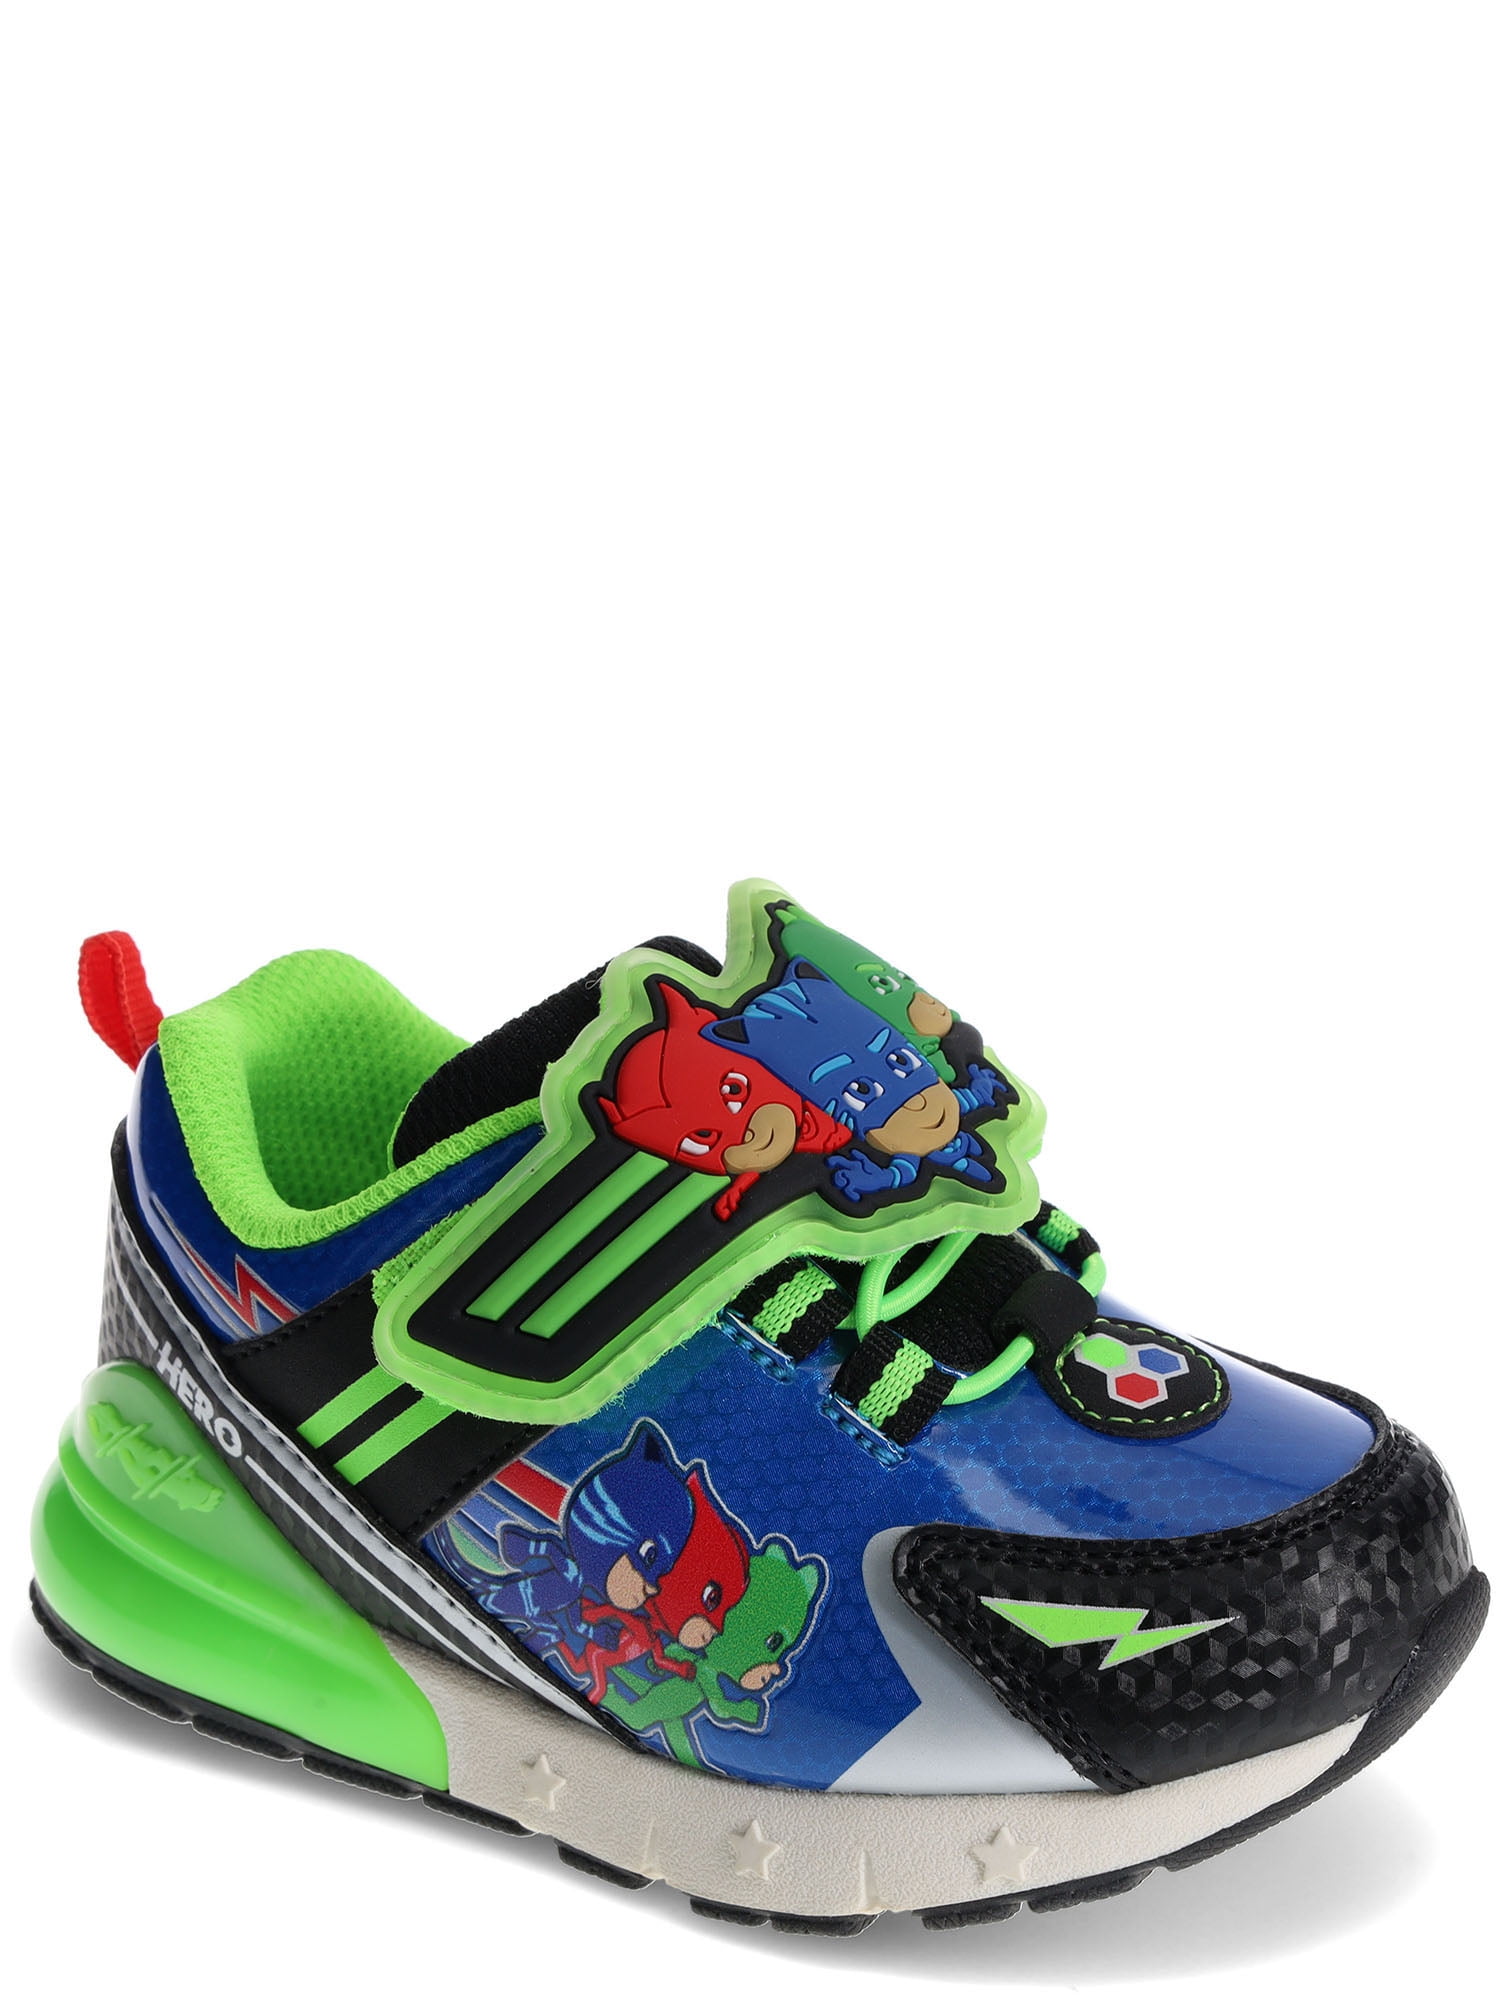 PJ Masks Toddler Shoes,Light Up Tennis Sneaker,Rubber Hard Bottom,Toddler/Kids Sizes 7 to 10 